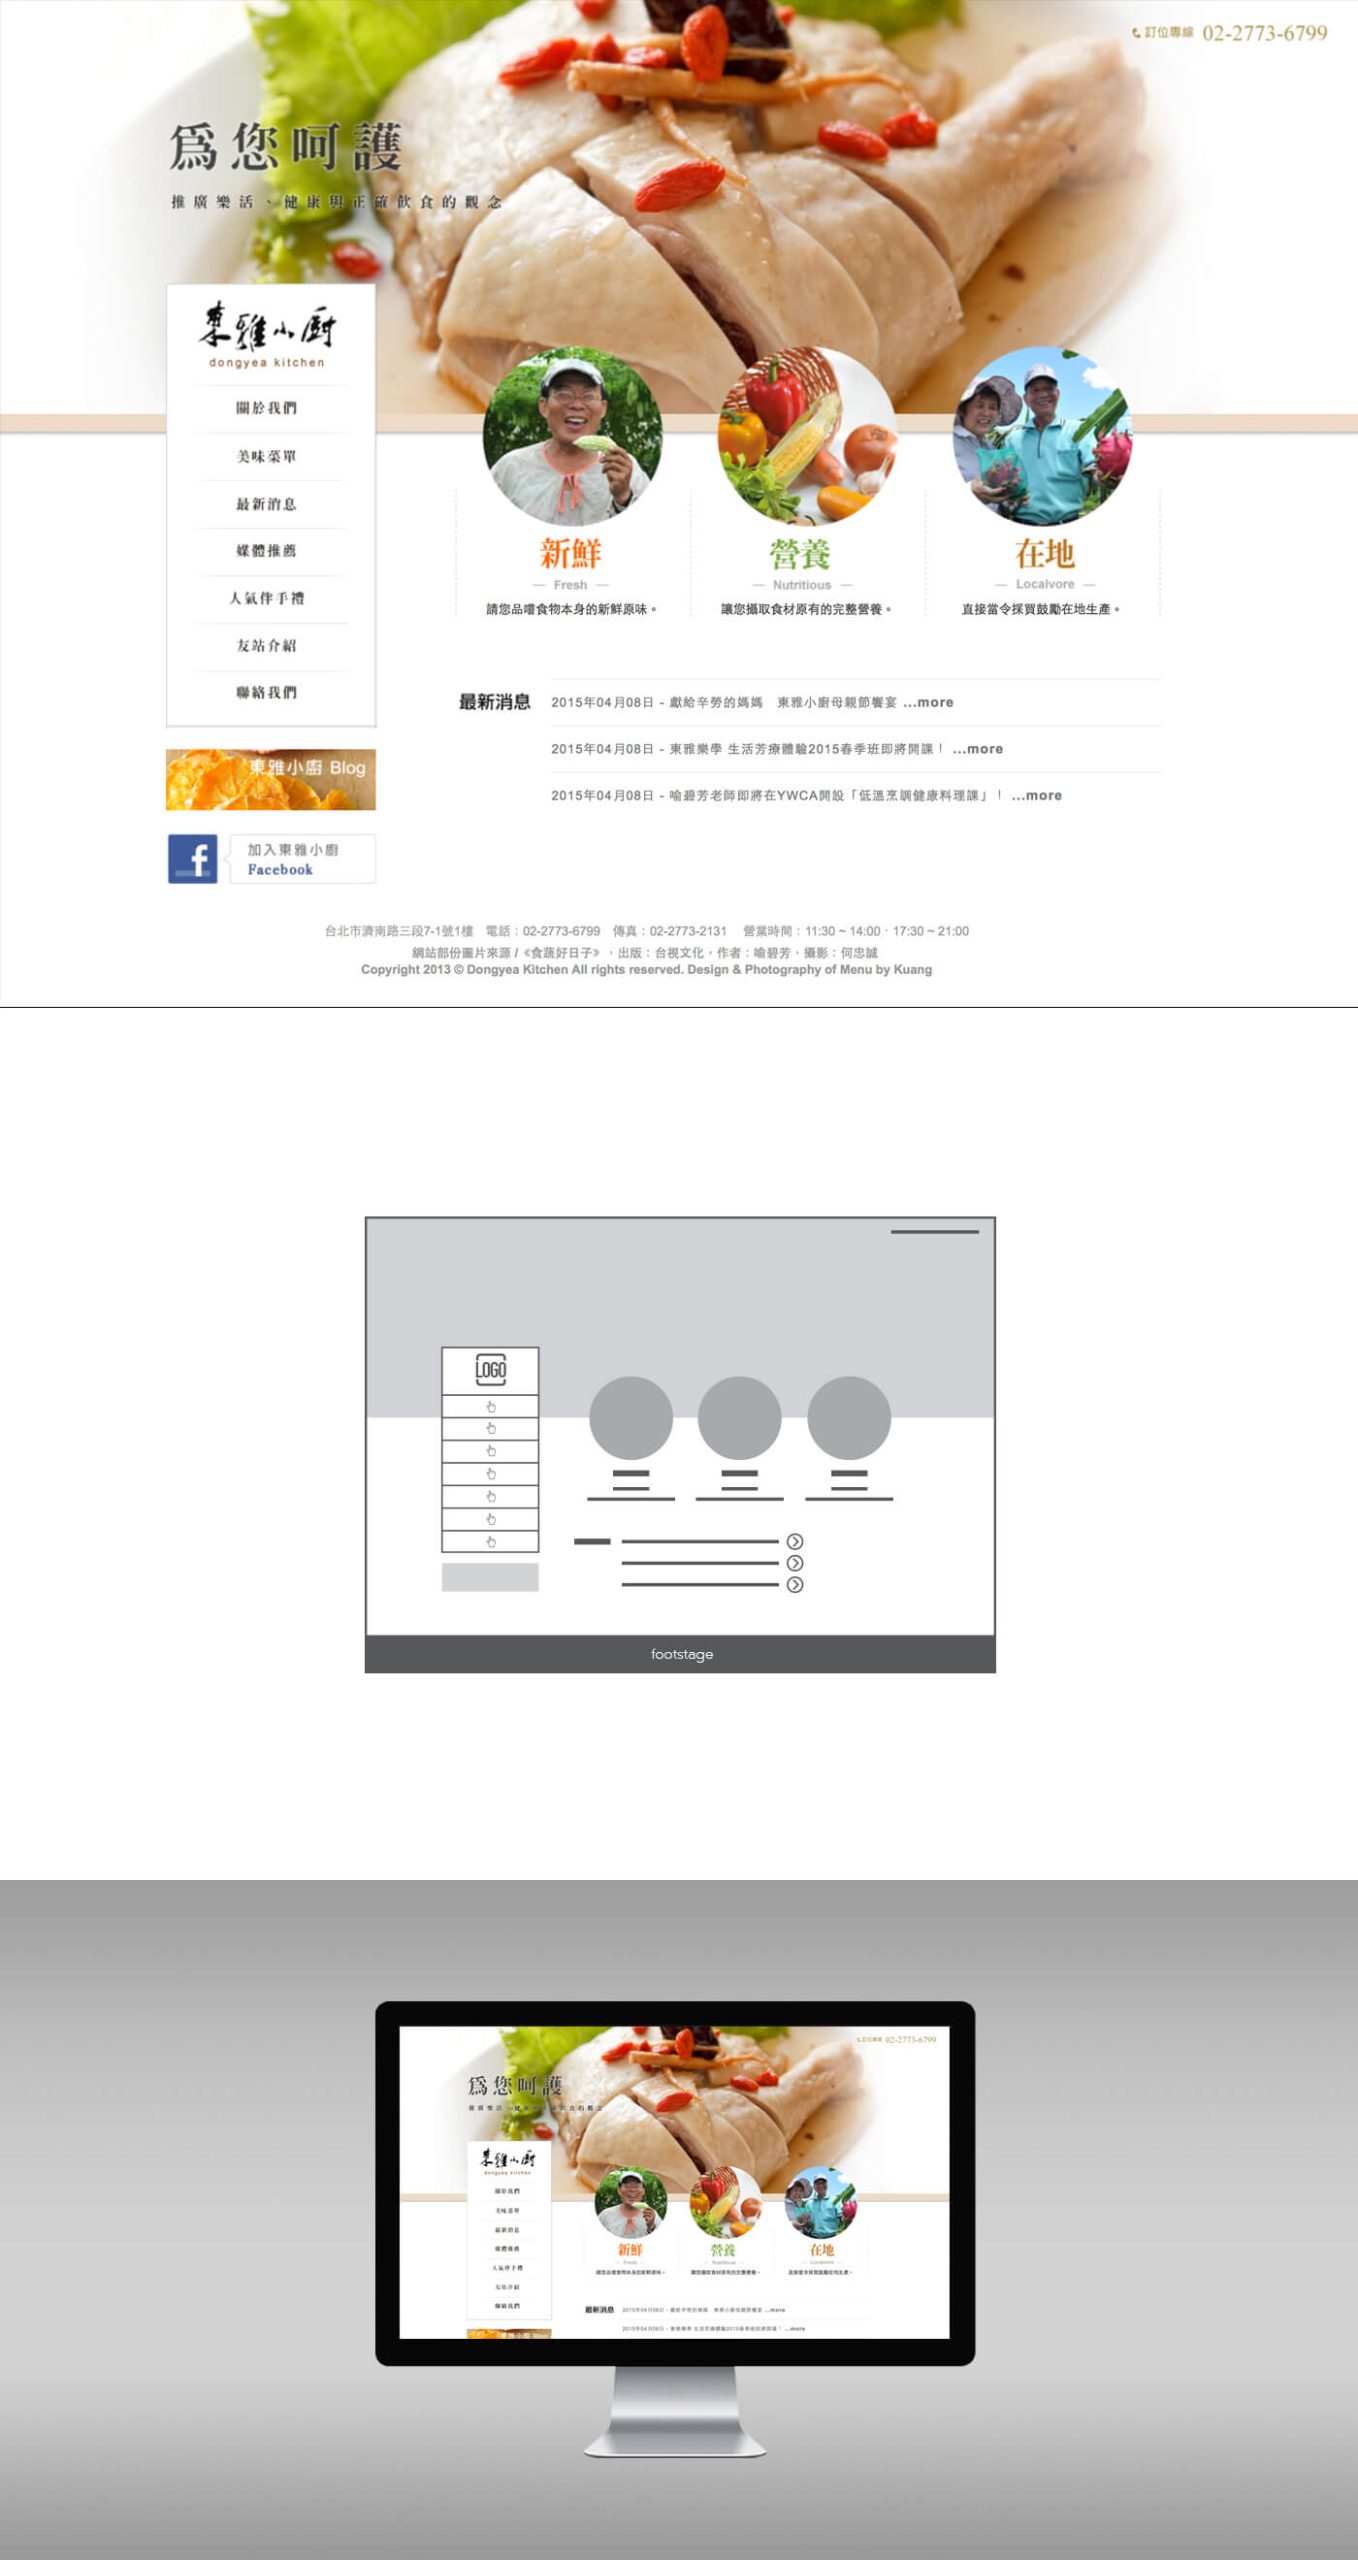 東雅小廚網站 Dongyea Kitchen Website Detail